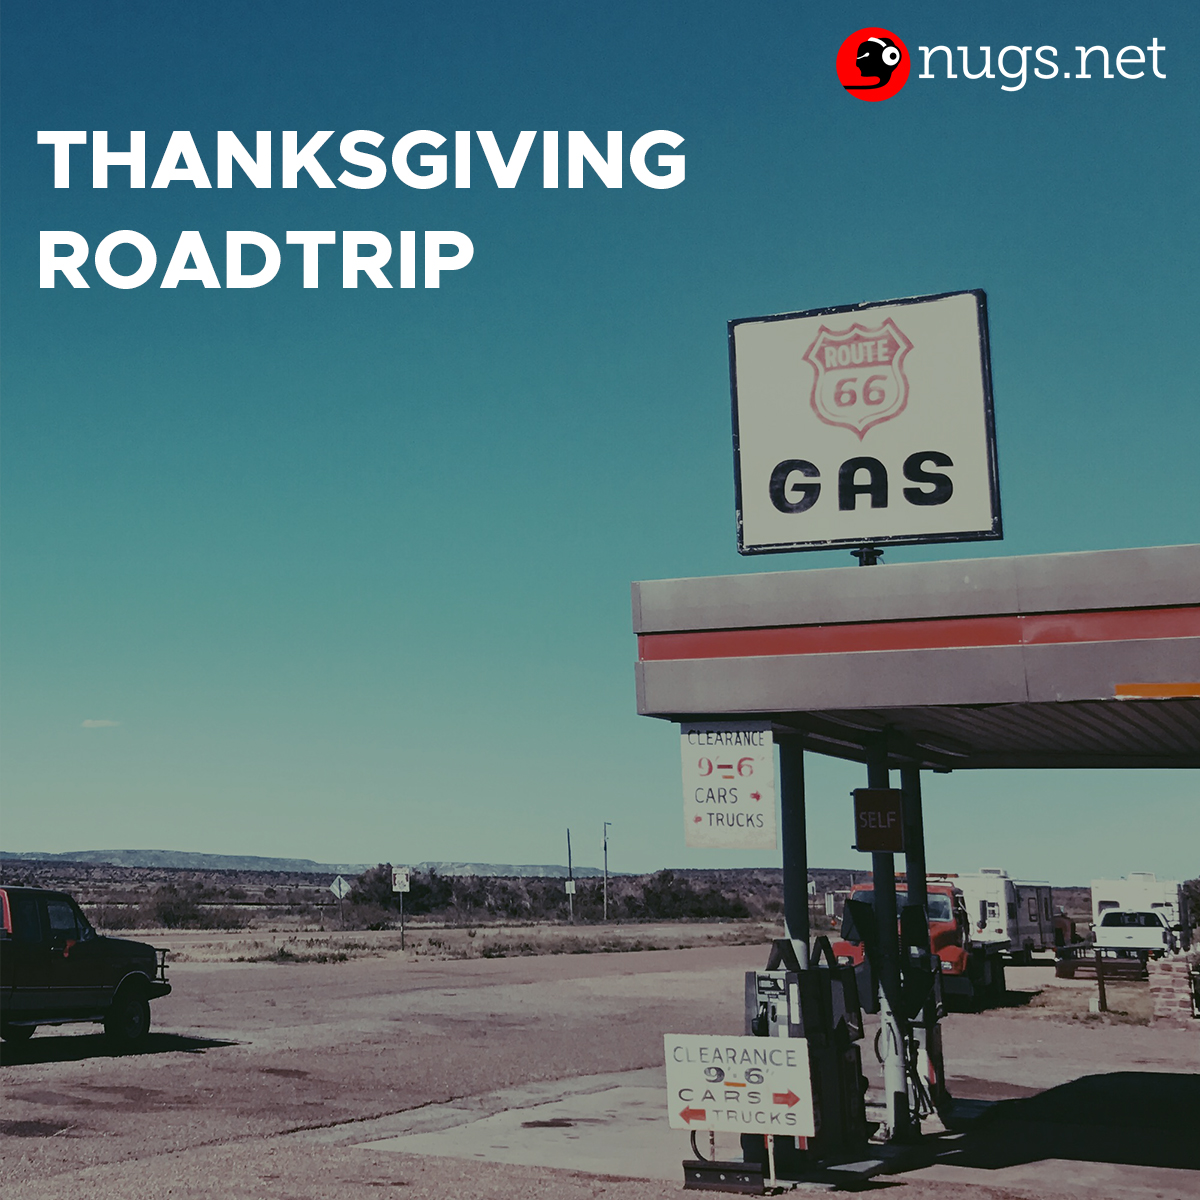 The nugs.net Thanksgiving Road Trip Playlist